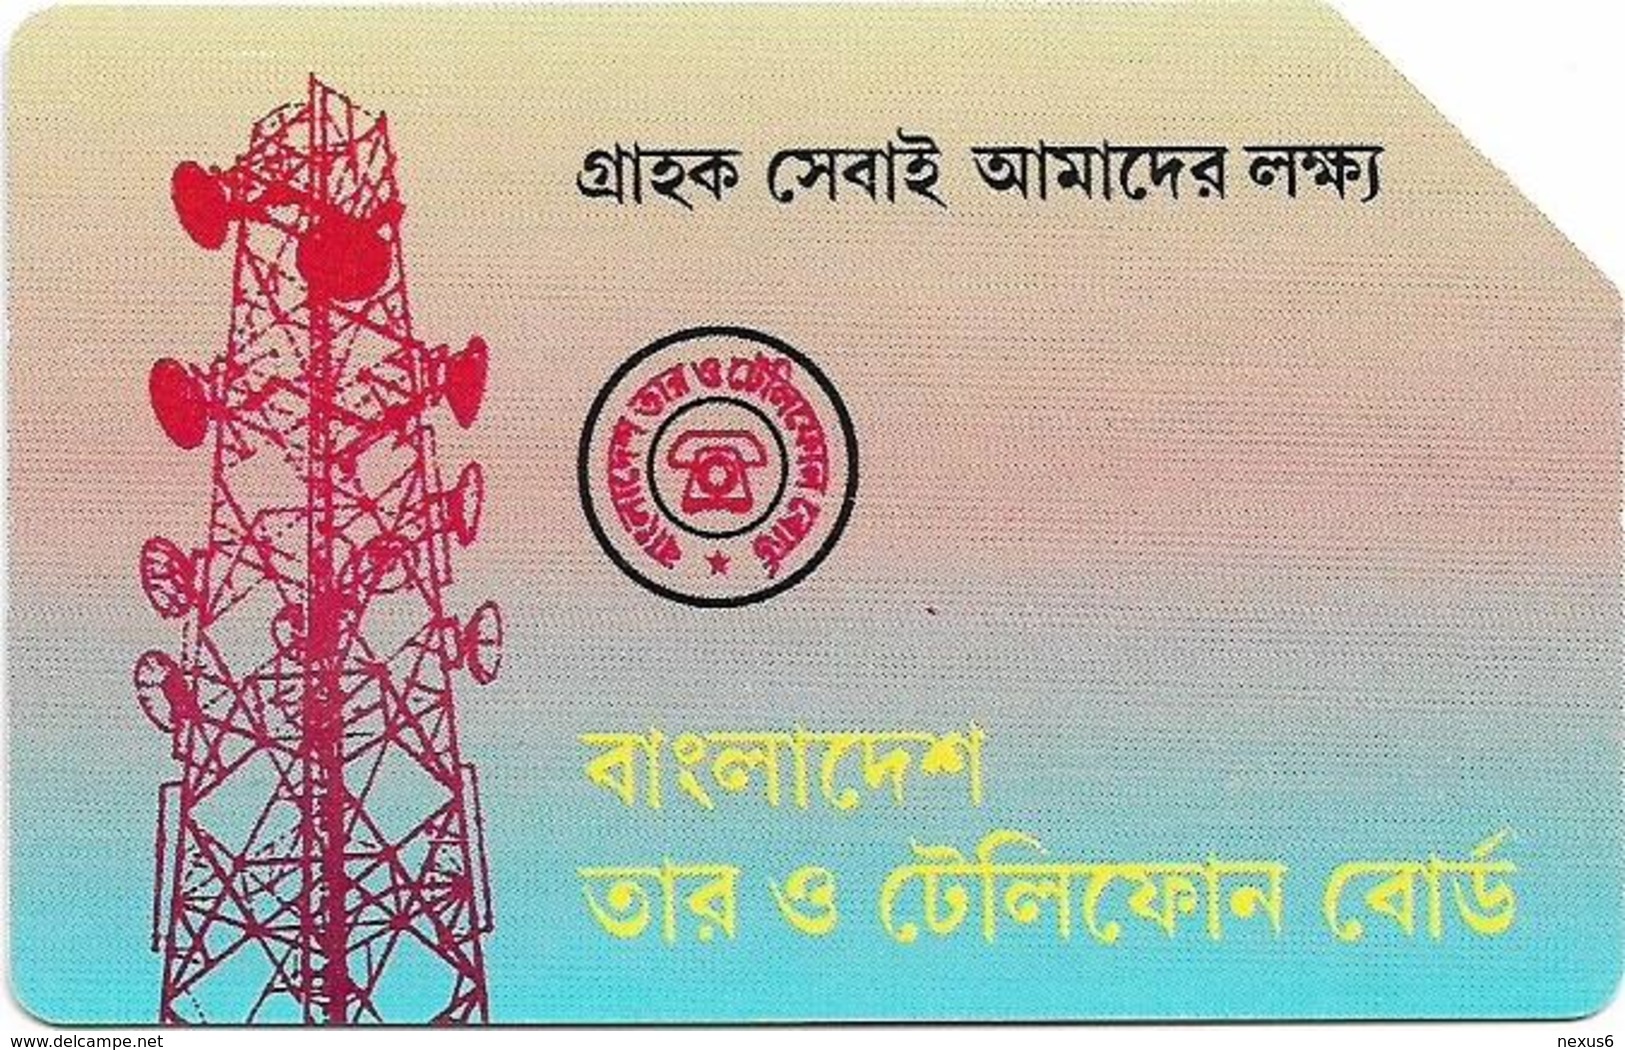 Bangladesh - Telephone Shilpa Sangstha (Urmet) - Radio Station (Big Magnetic Band), 1996, 100Units, Used - Bangladesch